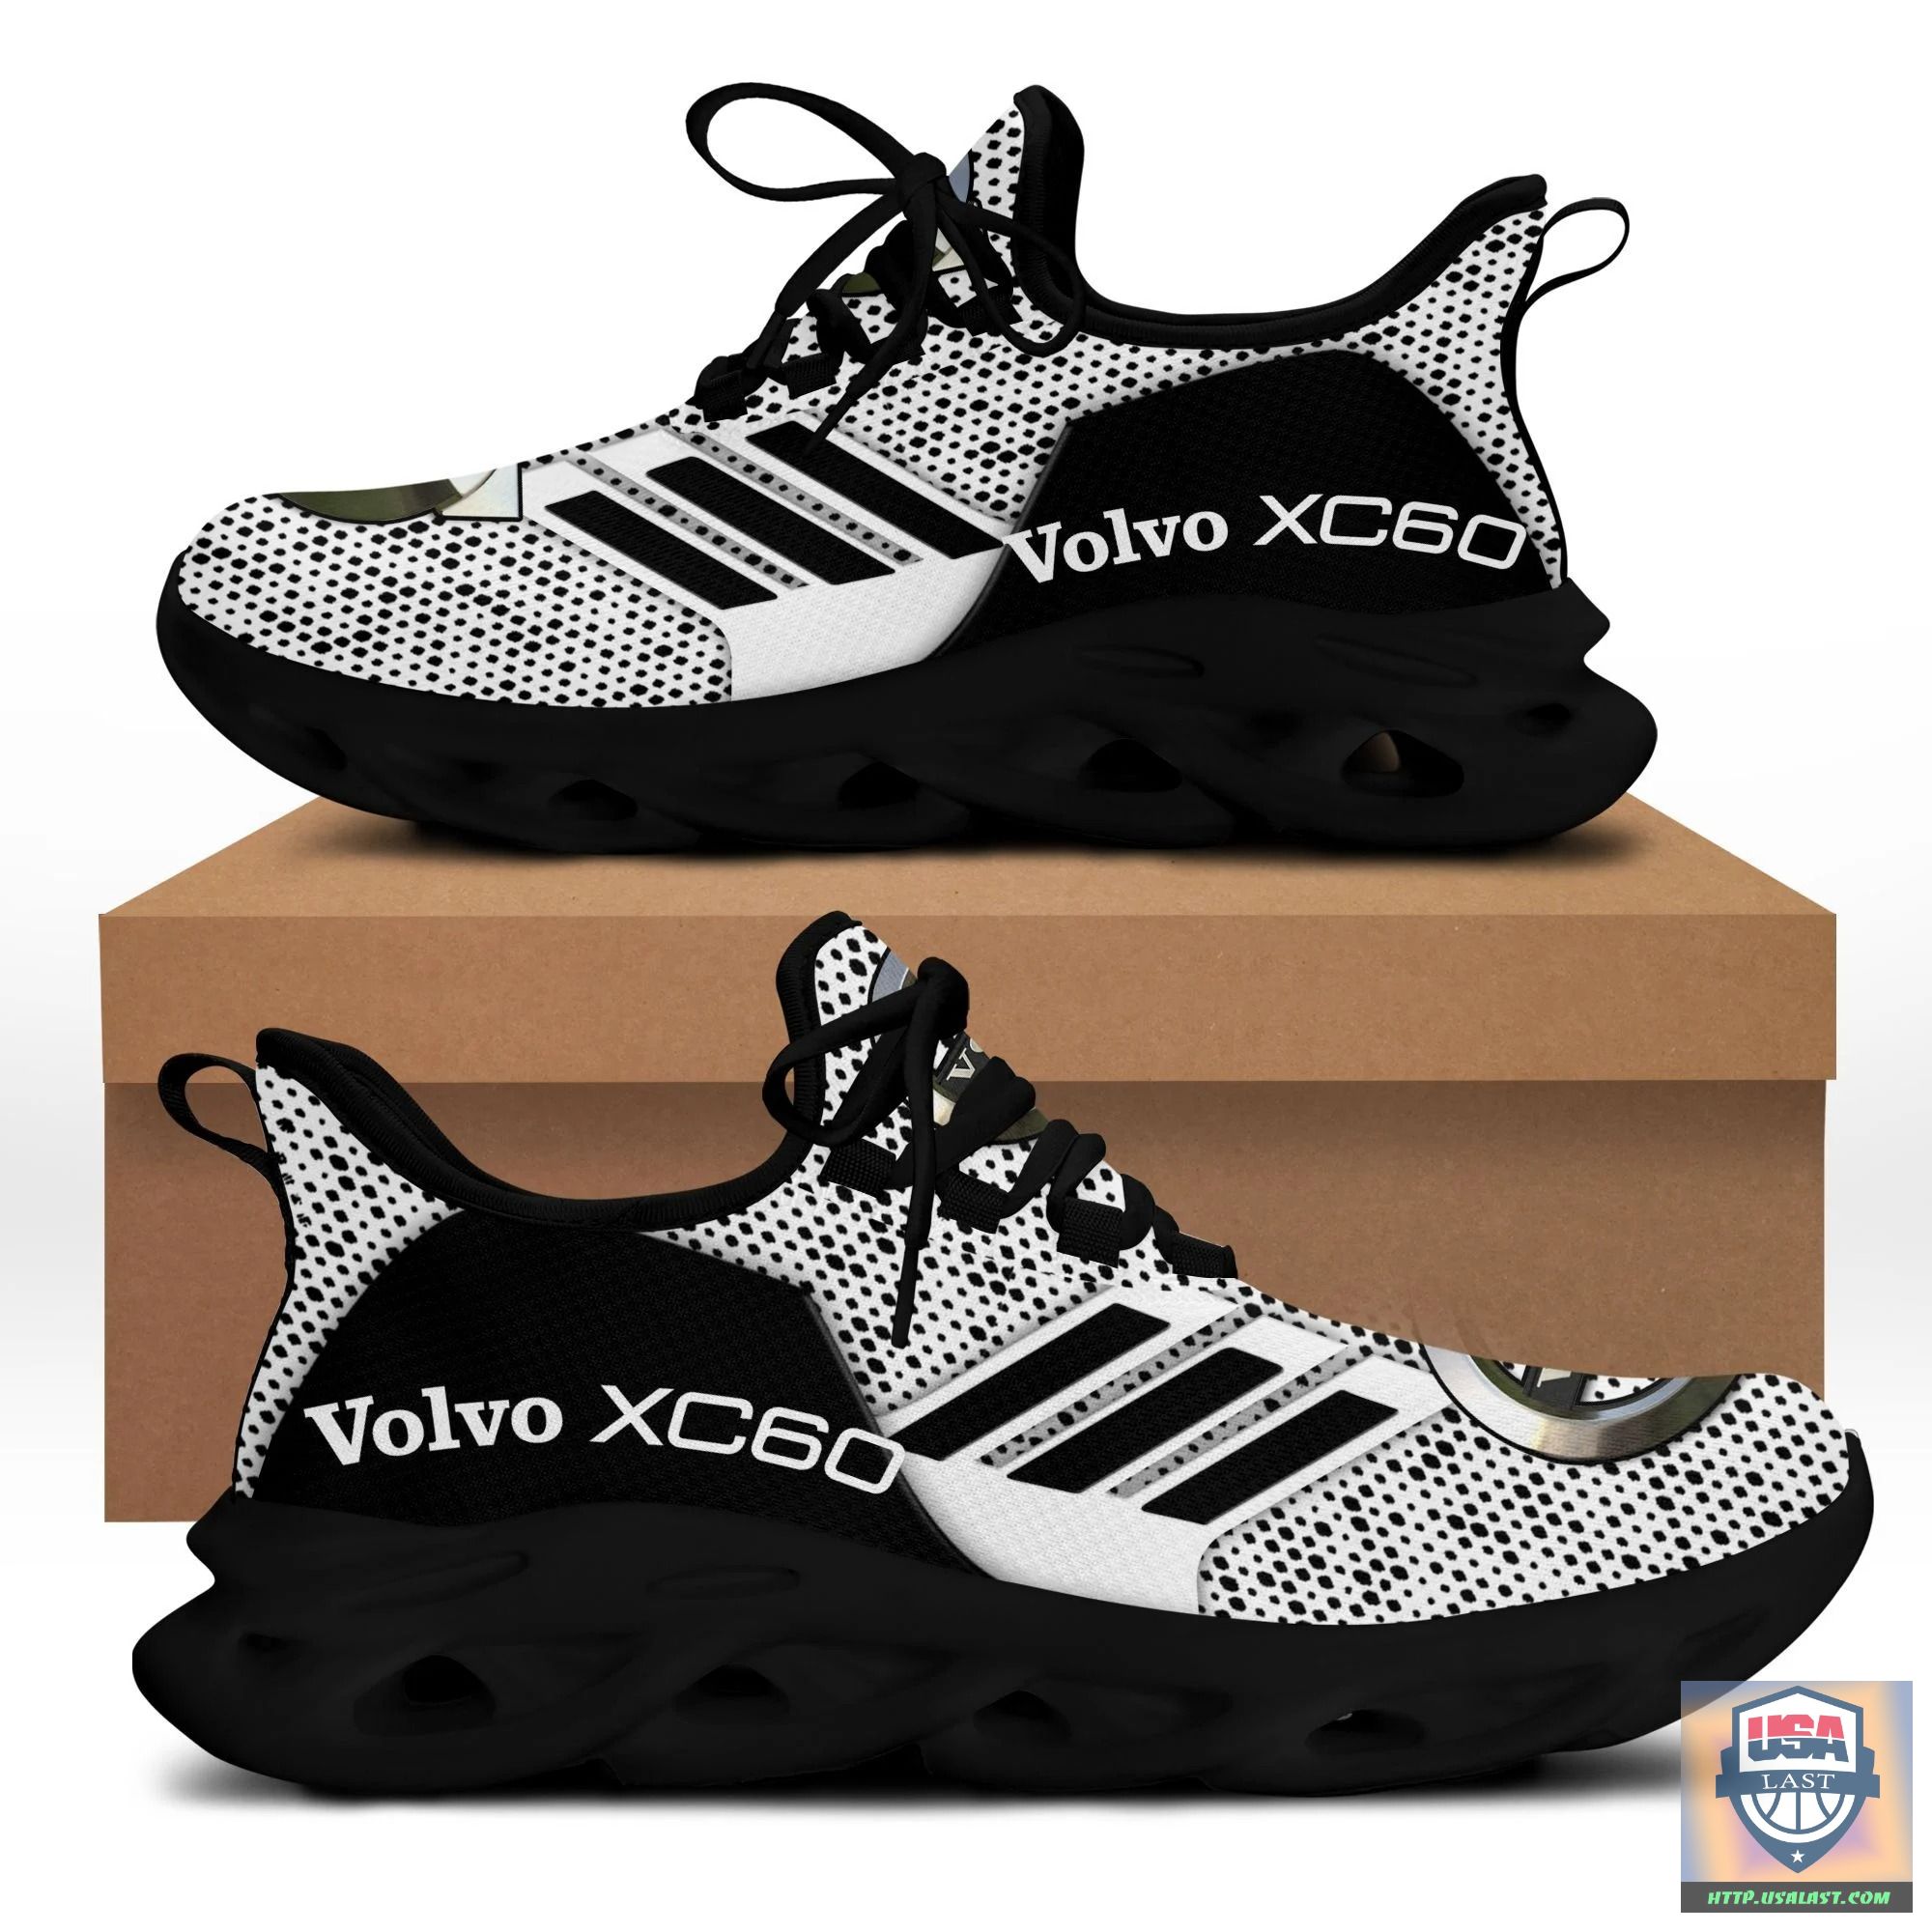 nOH0lDBB-T270722-68xxxVolvo-XC60-Clunky-Sneaker-Max-Soul-Shoes-White-Version.jpg